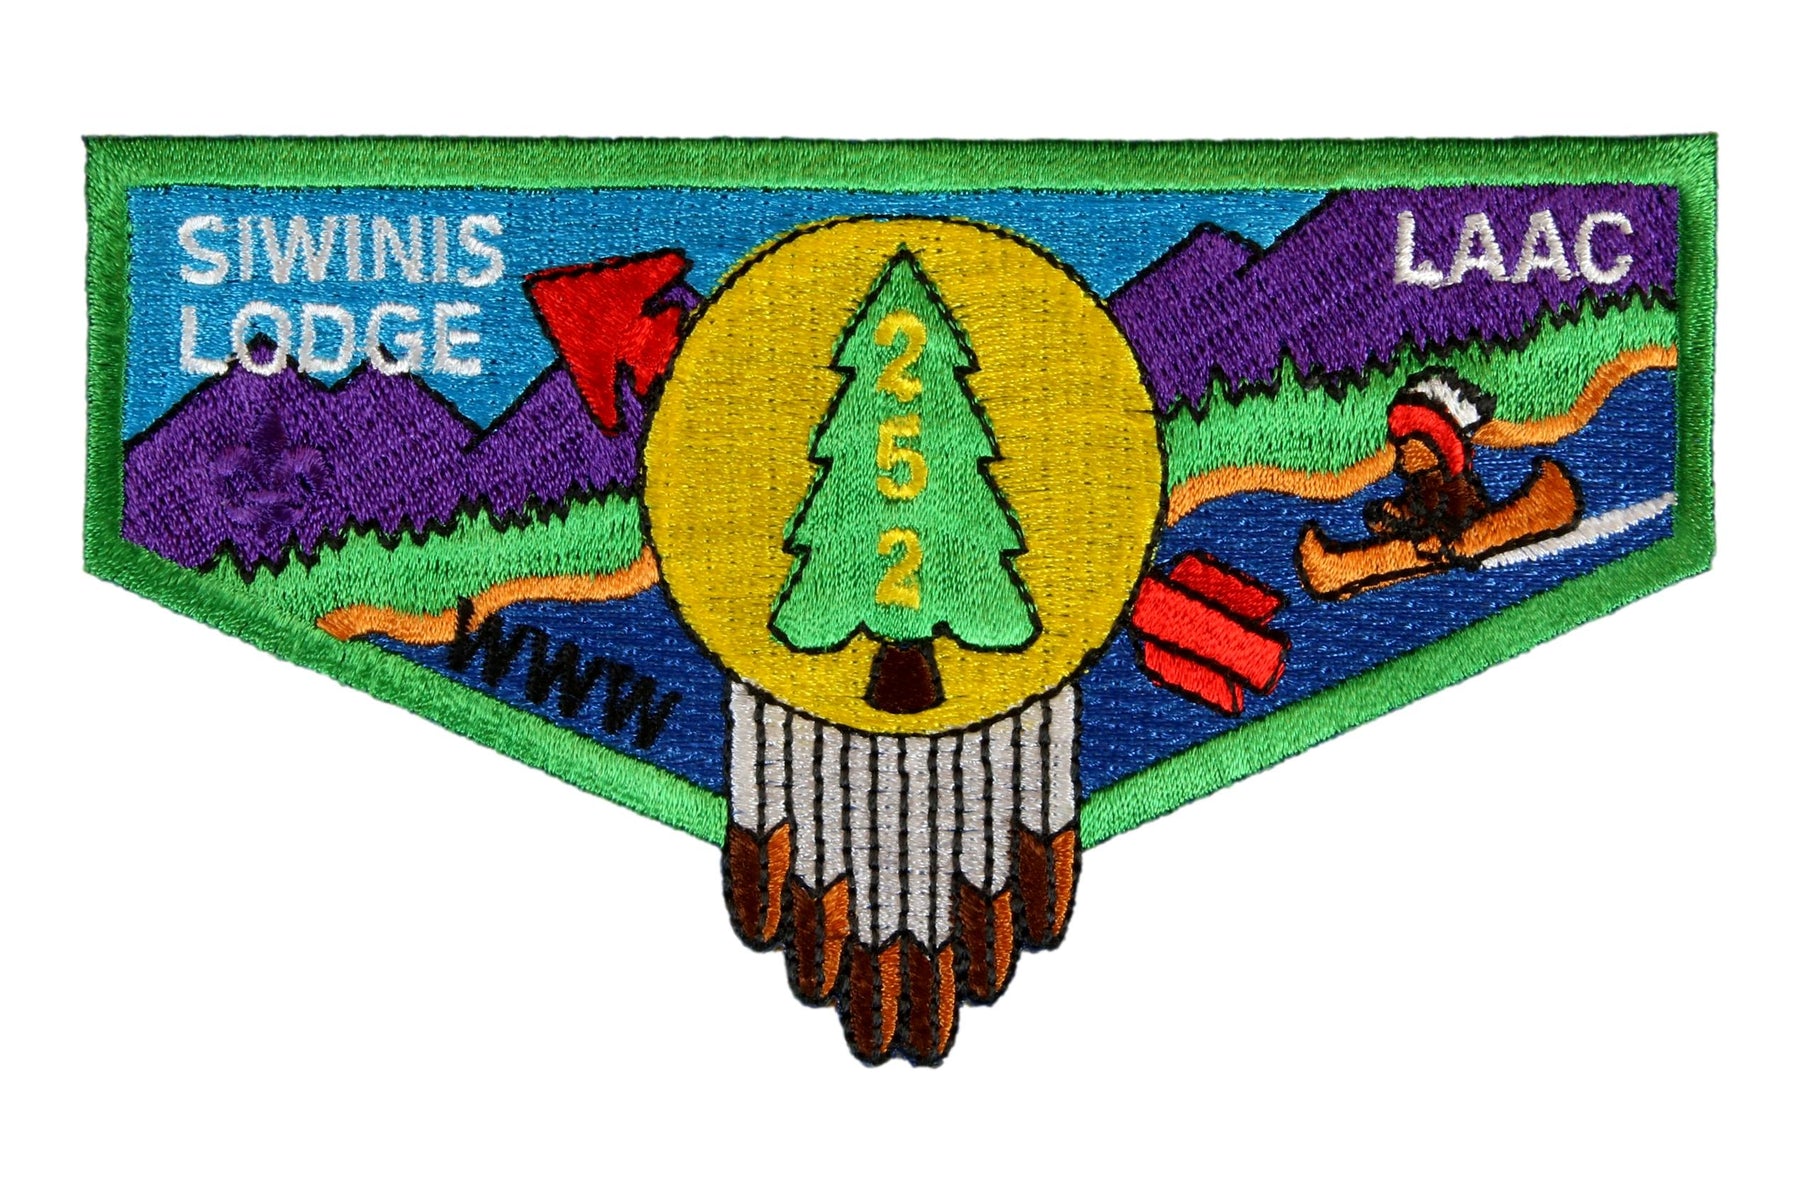 Lodge 252 Siwinis Flap S-37